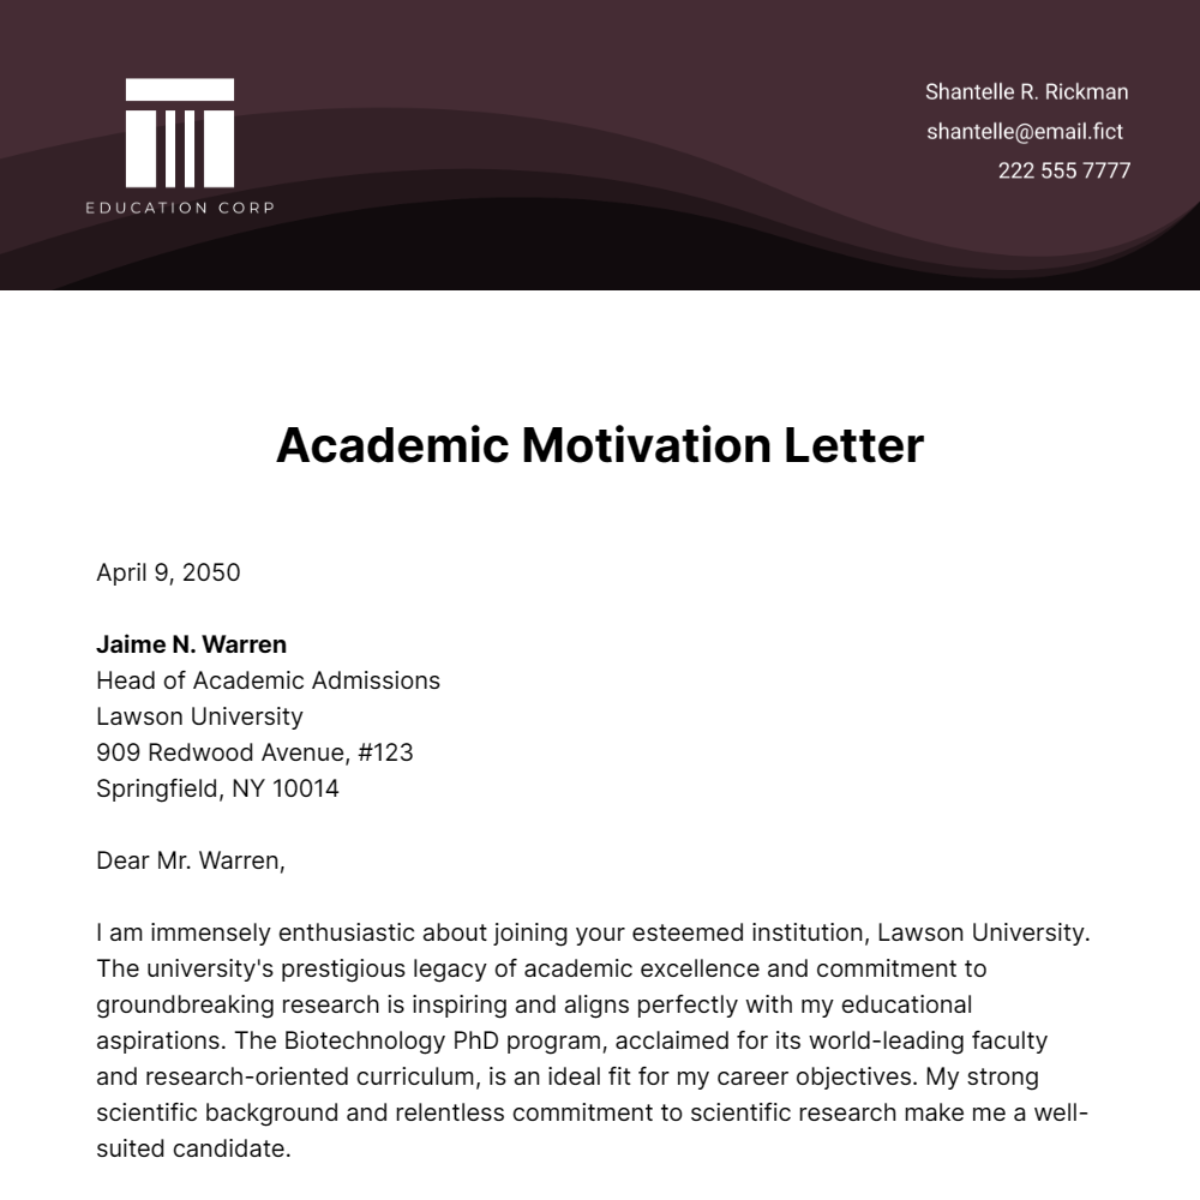 Academic Motivation Letter Template